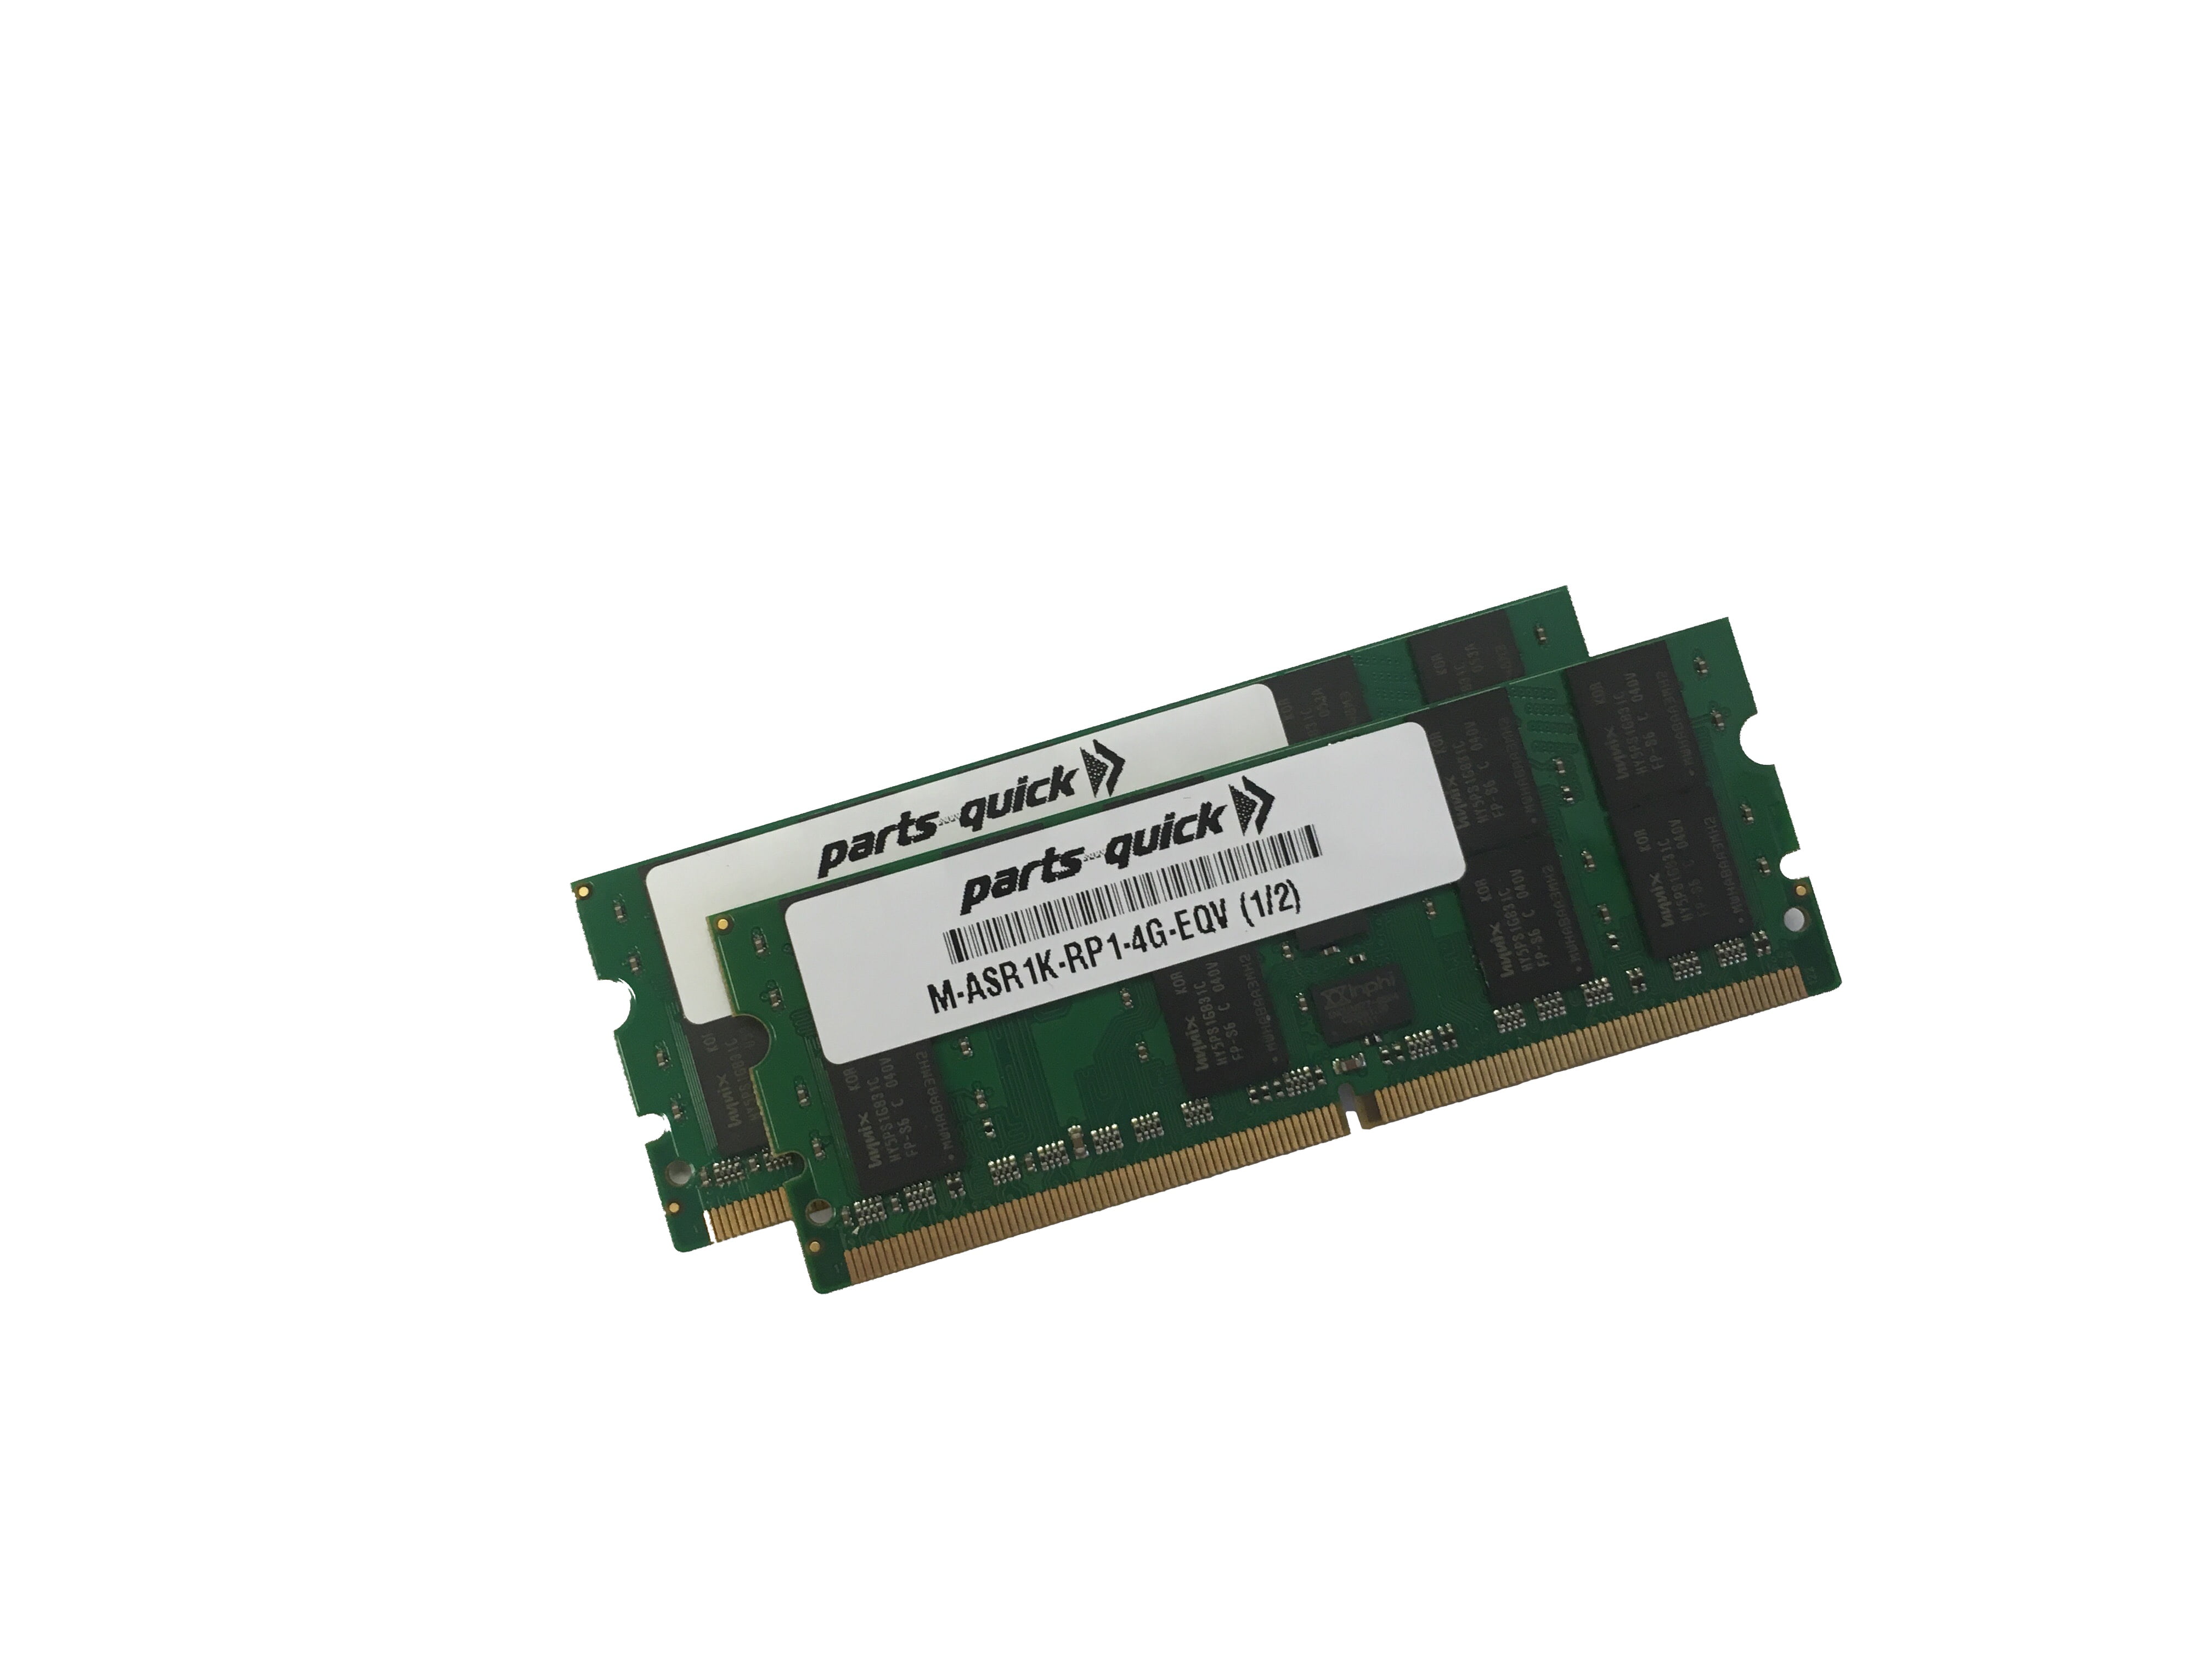 M-ASR1K-RP1-4GB 4GB memory Cisco ASR 1000 RP1 Approved 